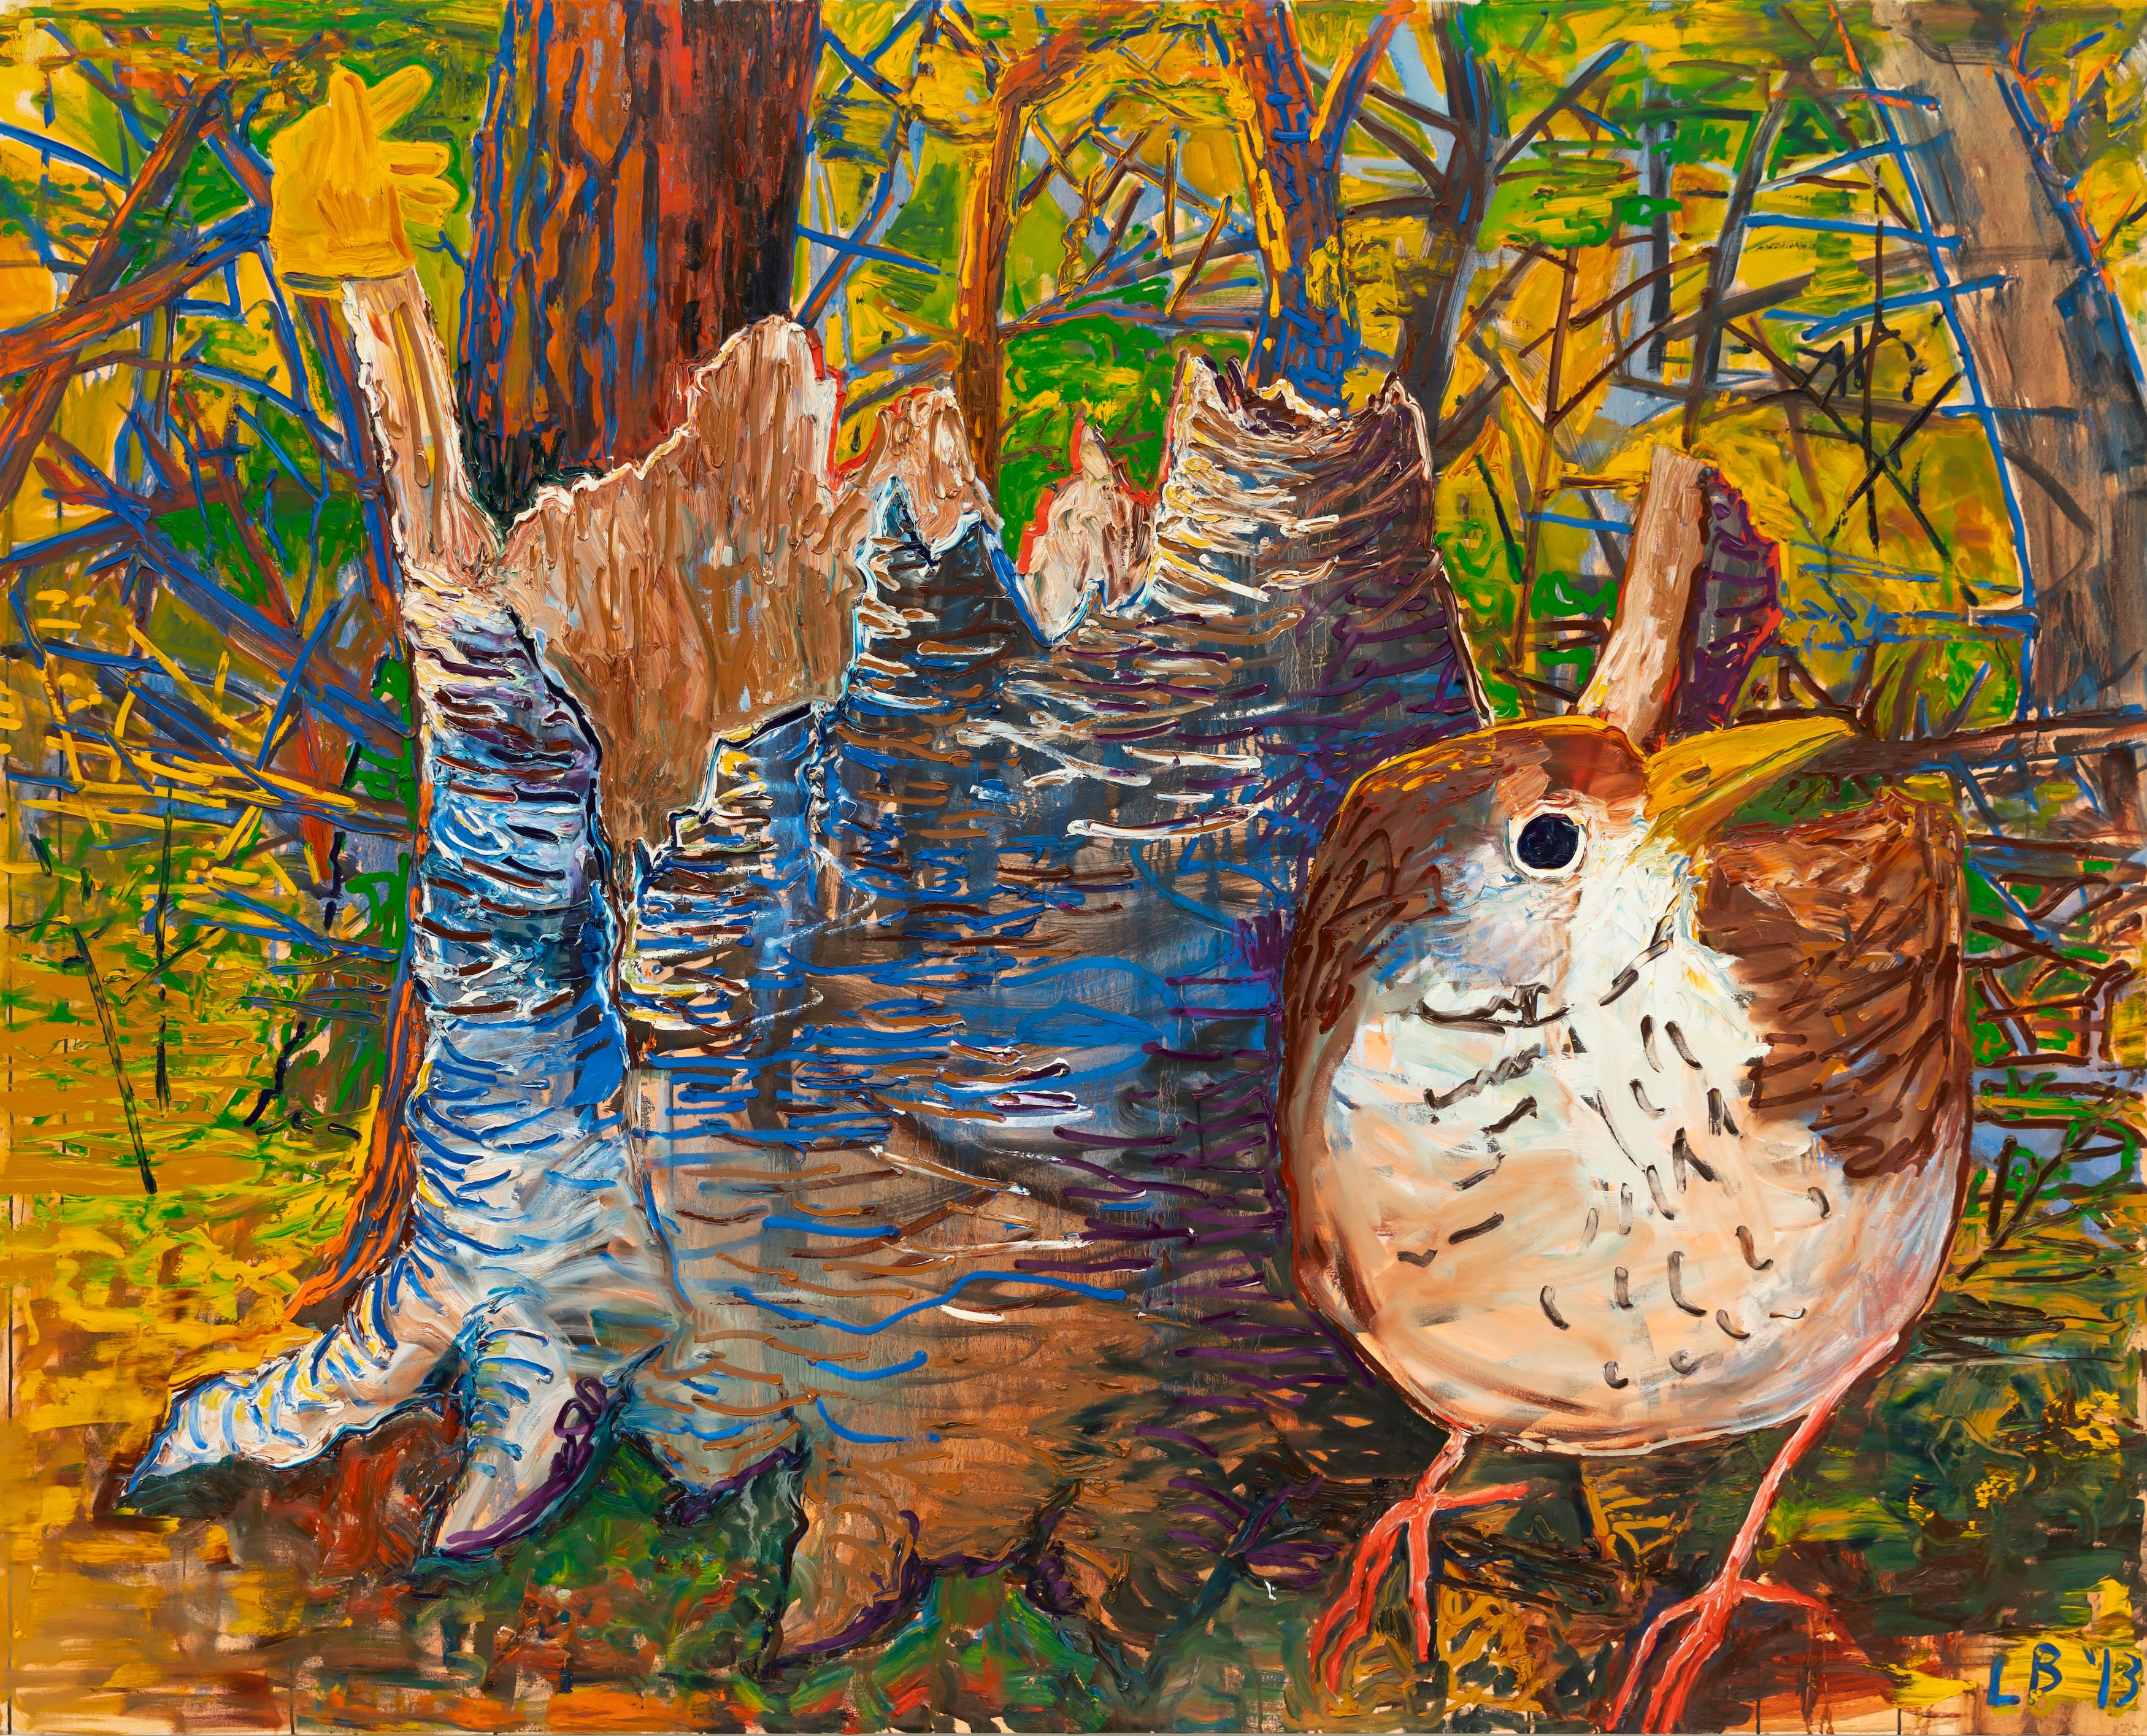 Landscape Painting Leslie Bostrom - The Yellow Grove, huile sur toile, 2013